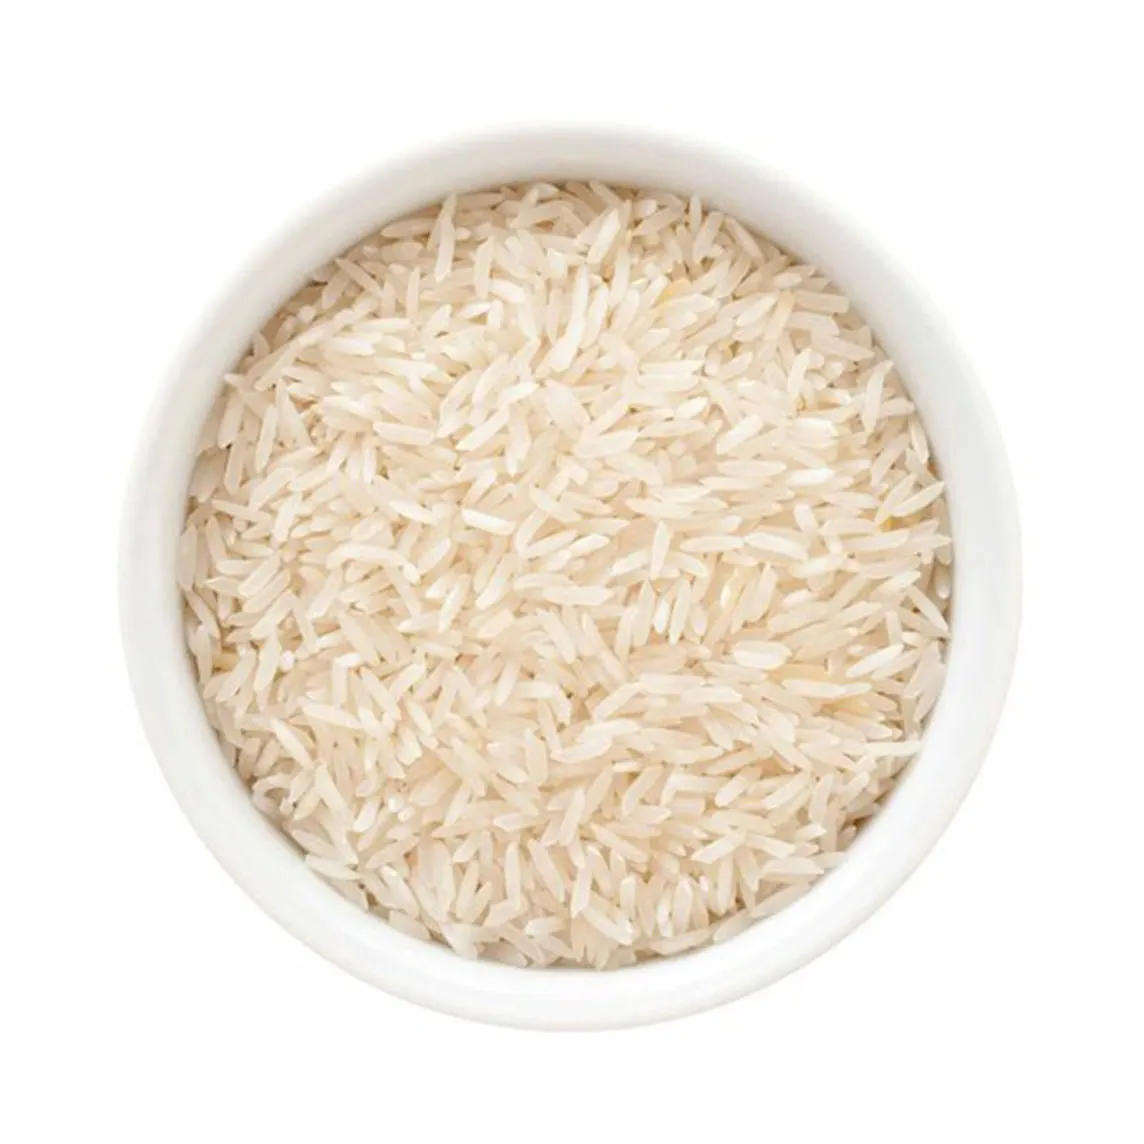 Exportateur de riz à grains longs Irri-6 15%, 20%, 25% 30% à 100% riz en brisures ainsi que riz Basmati-385, prix du riz Super Basmati